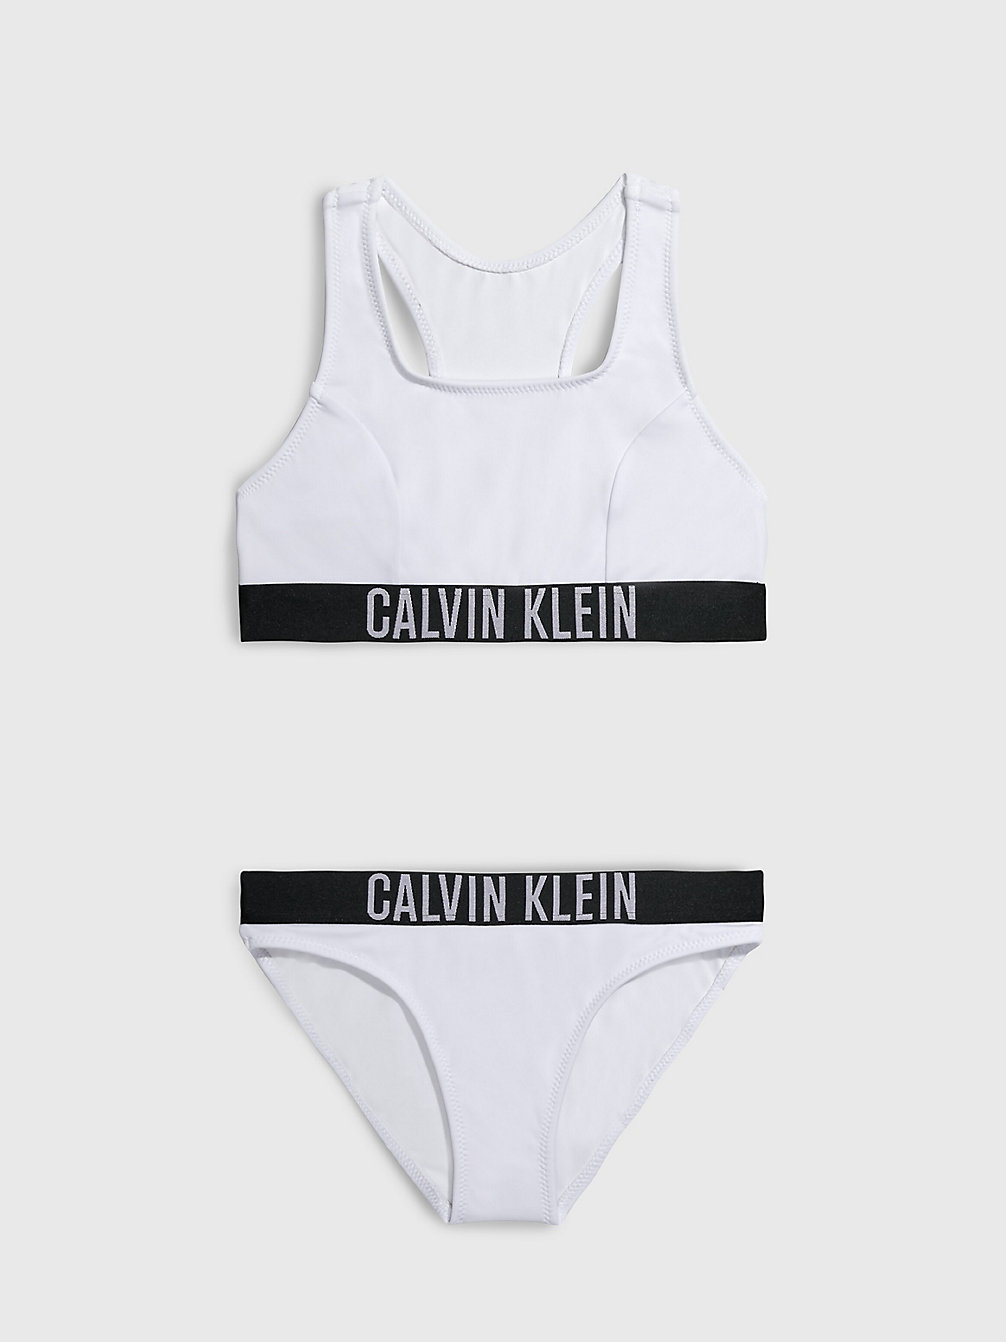 PVH CLASSIC WHITE Ensemble Bikini Brassière Pour Fille - Intense Power undefined filles Calvin Klein